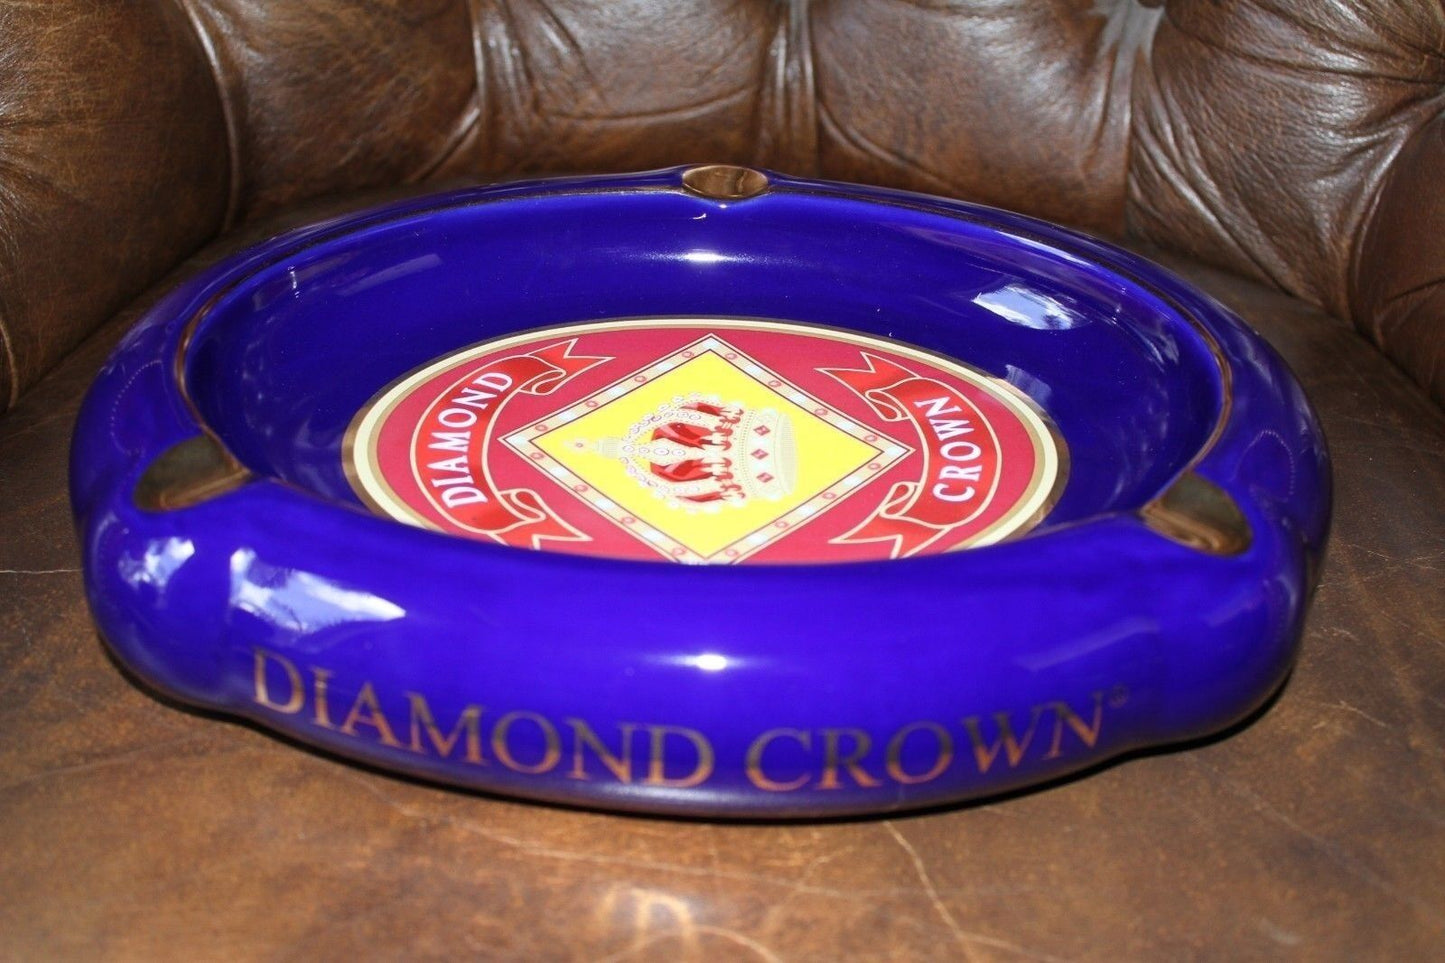 Diamond Crown Ceramic Ashtray